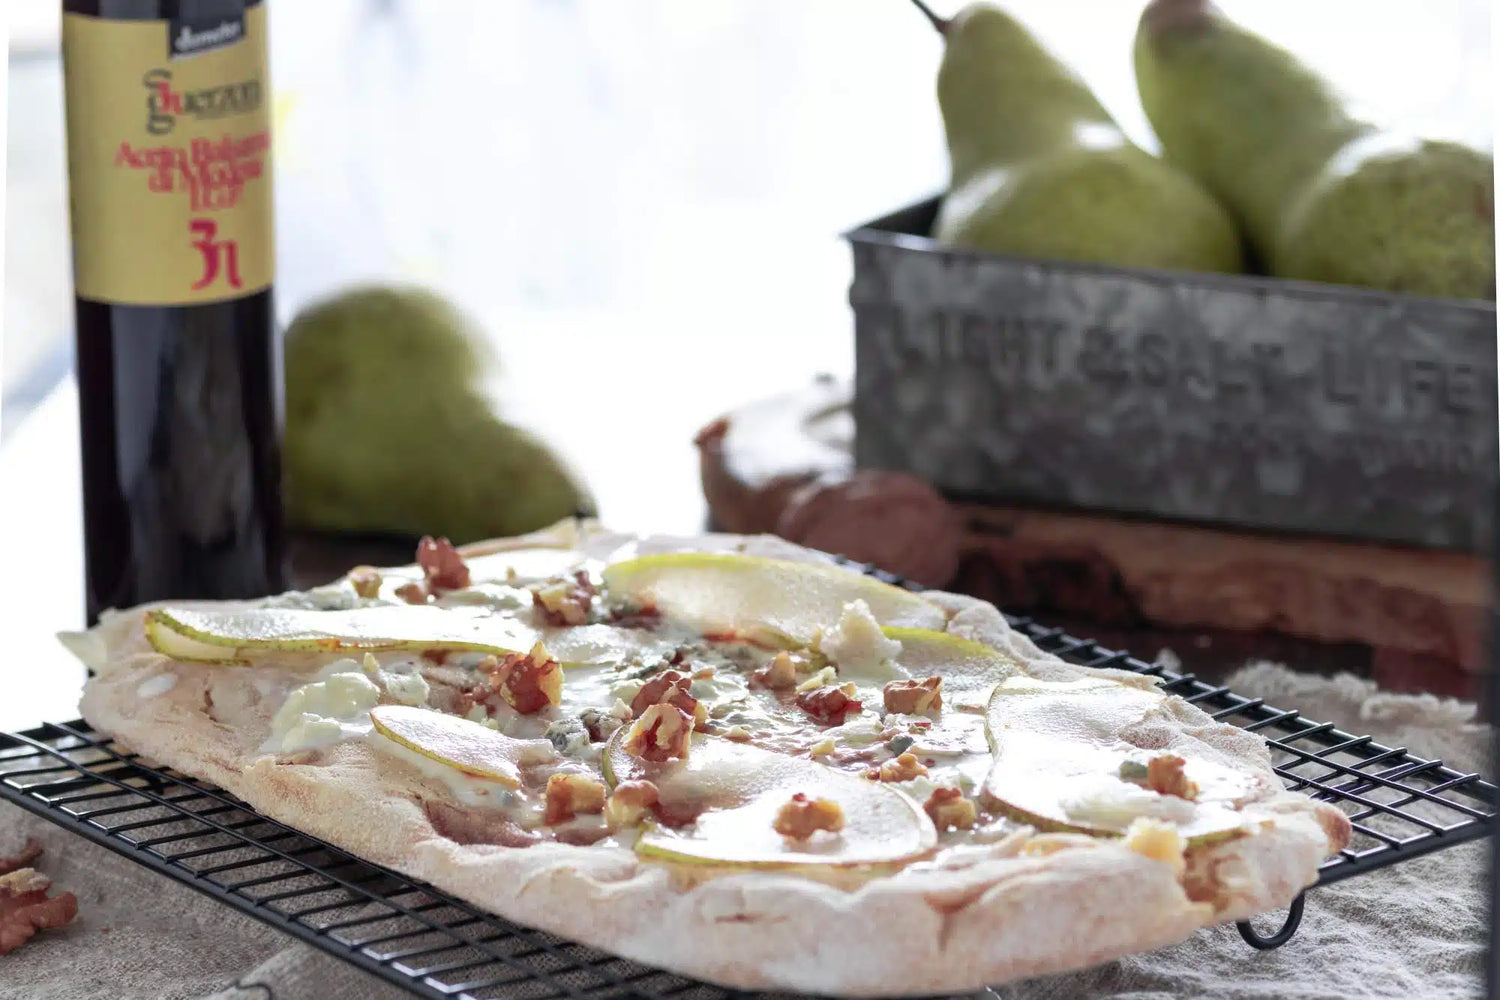 Pinsa romana with gorgonzola, pears, walnuts and drops of organic balsamic vinegar of modena